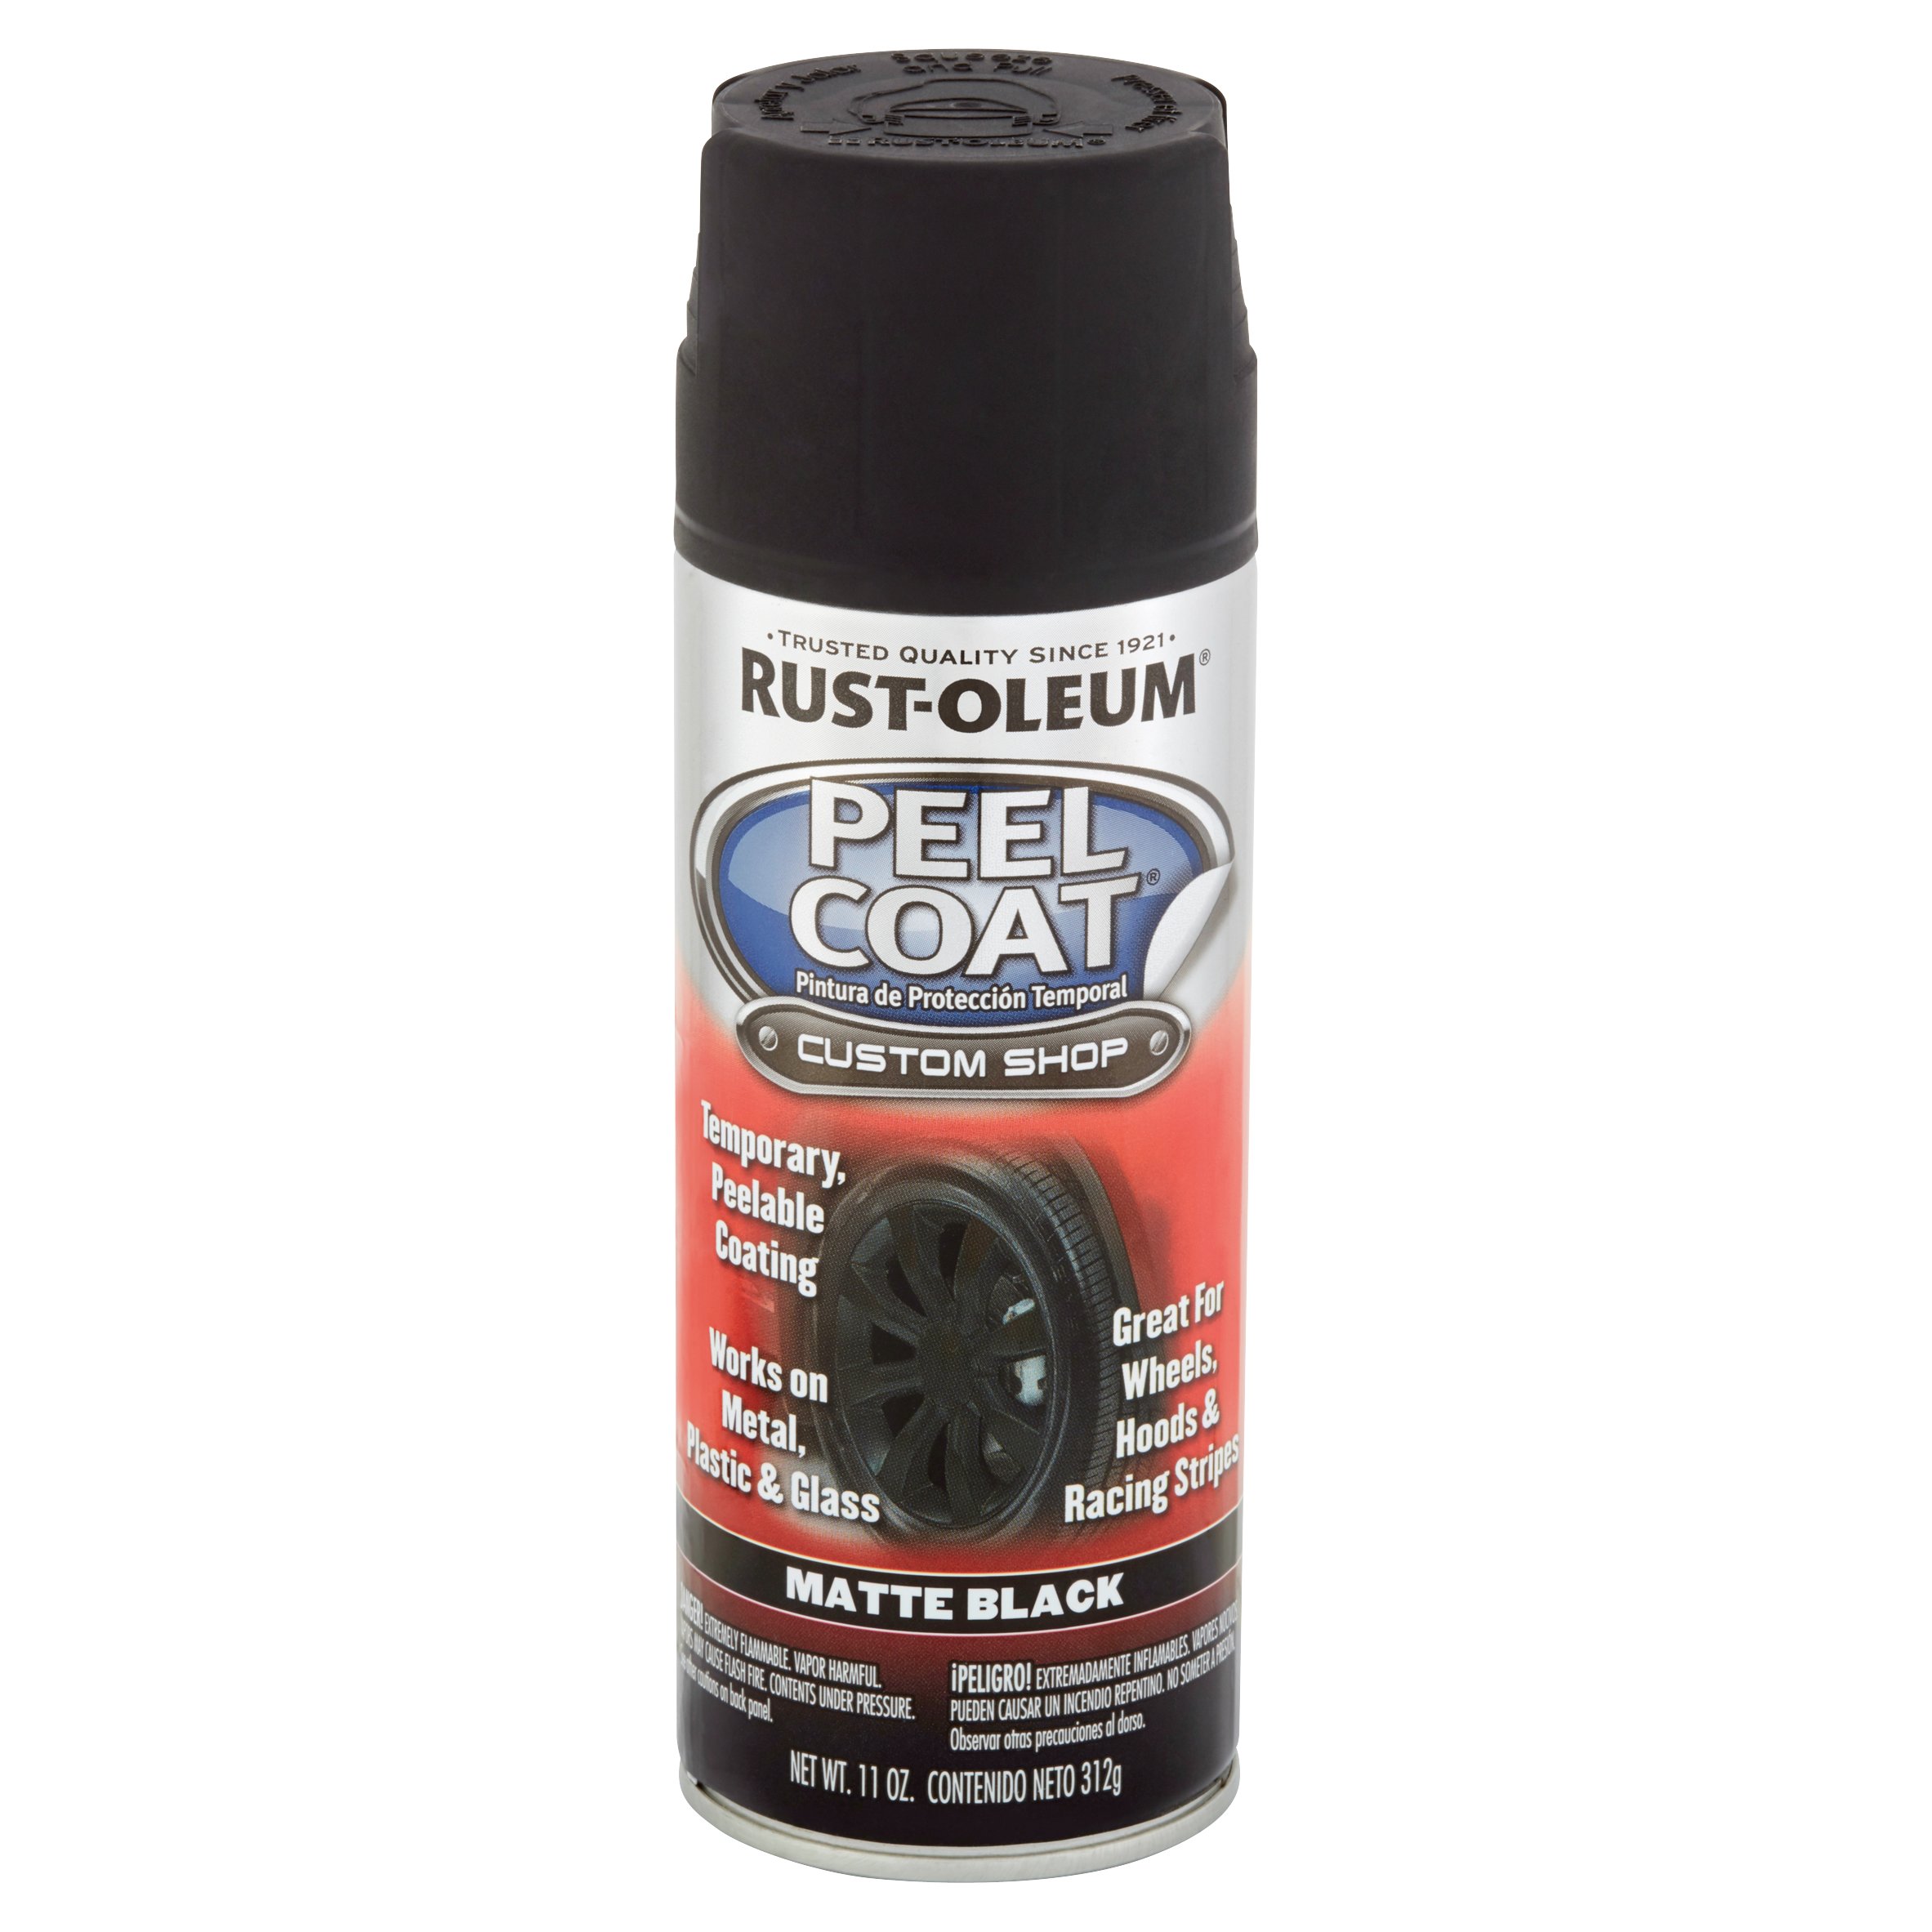 Rust-Oleum Peel Coat Matte Black Spray Paint 11 oz - image 3 of 5